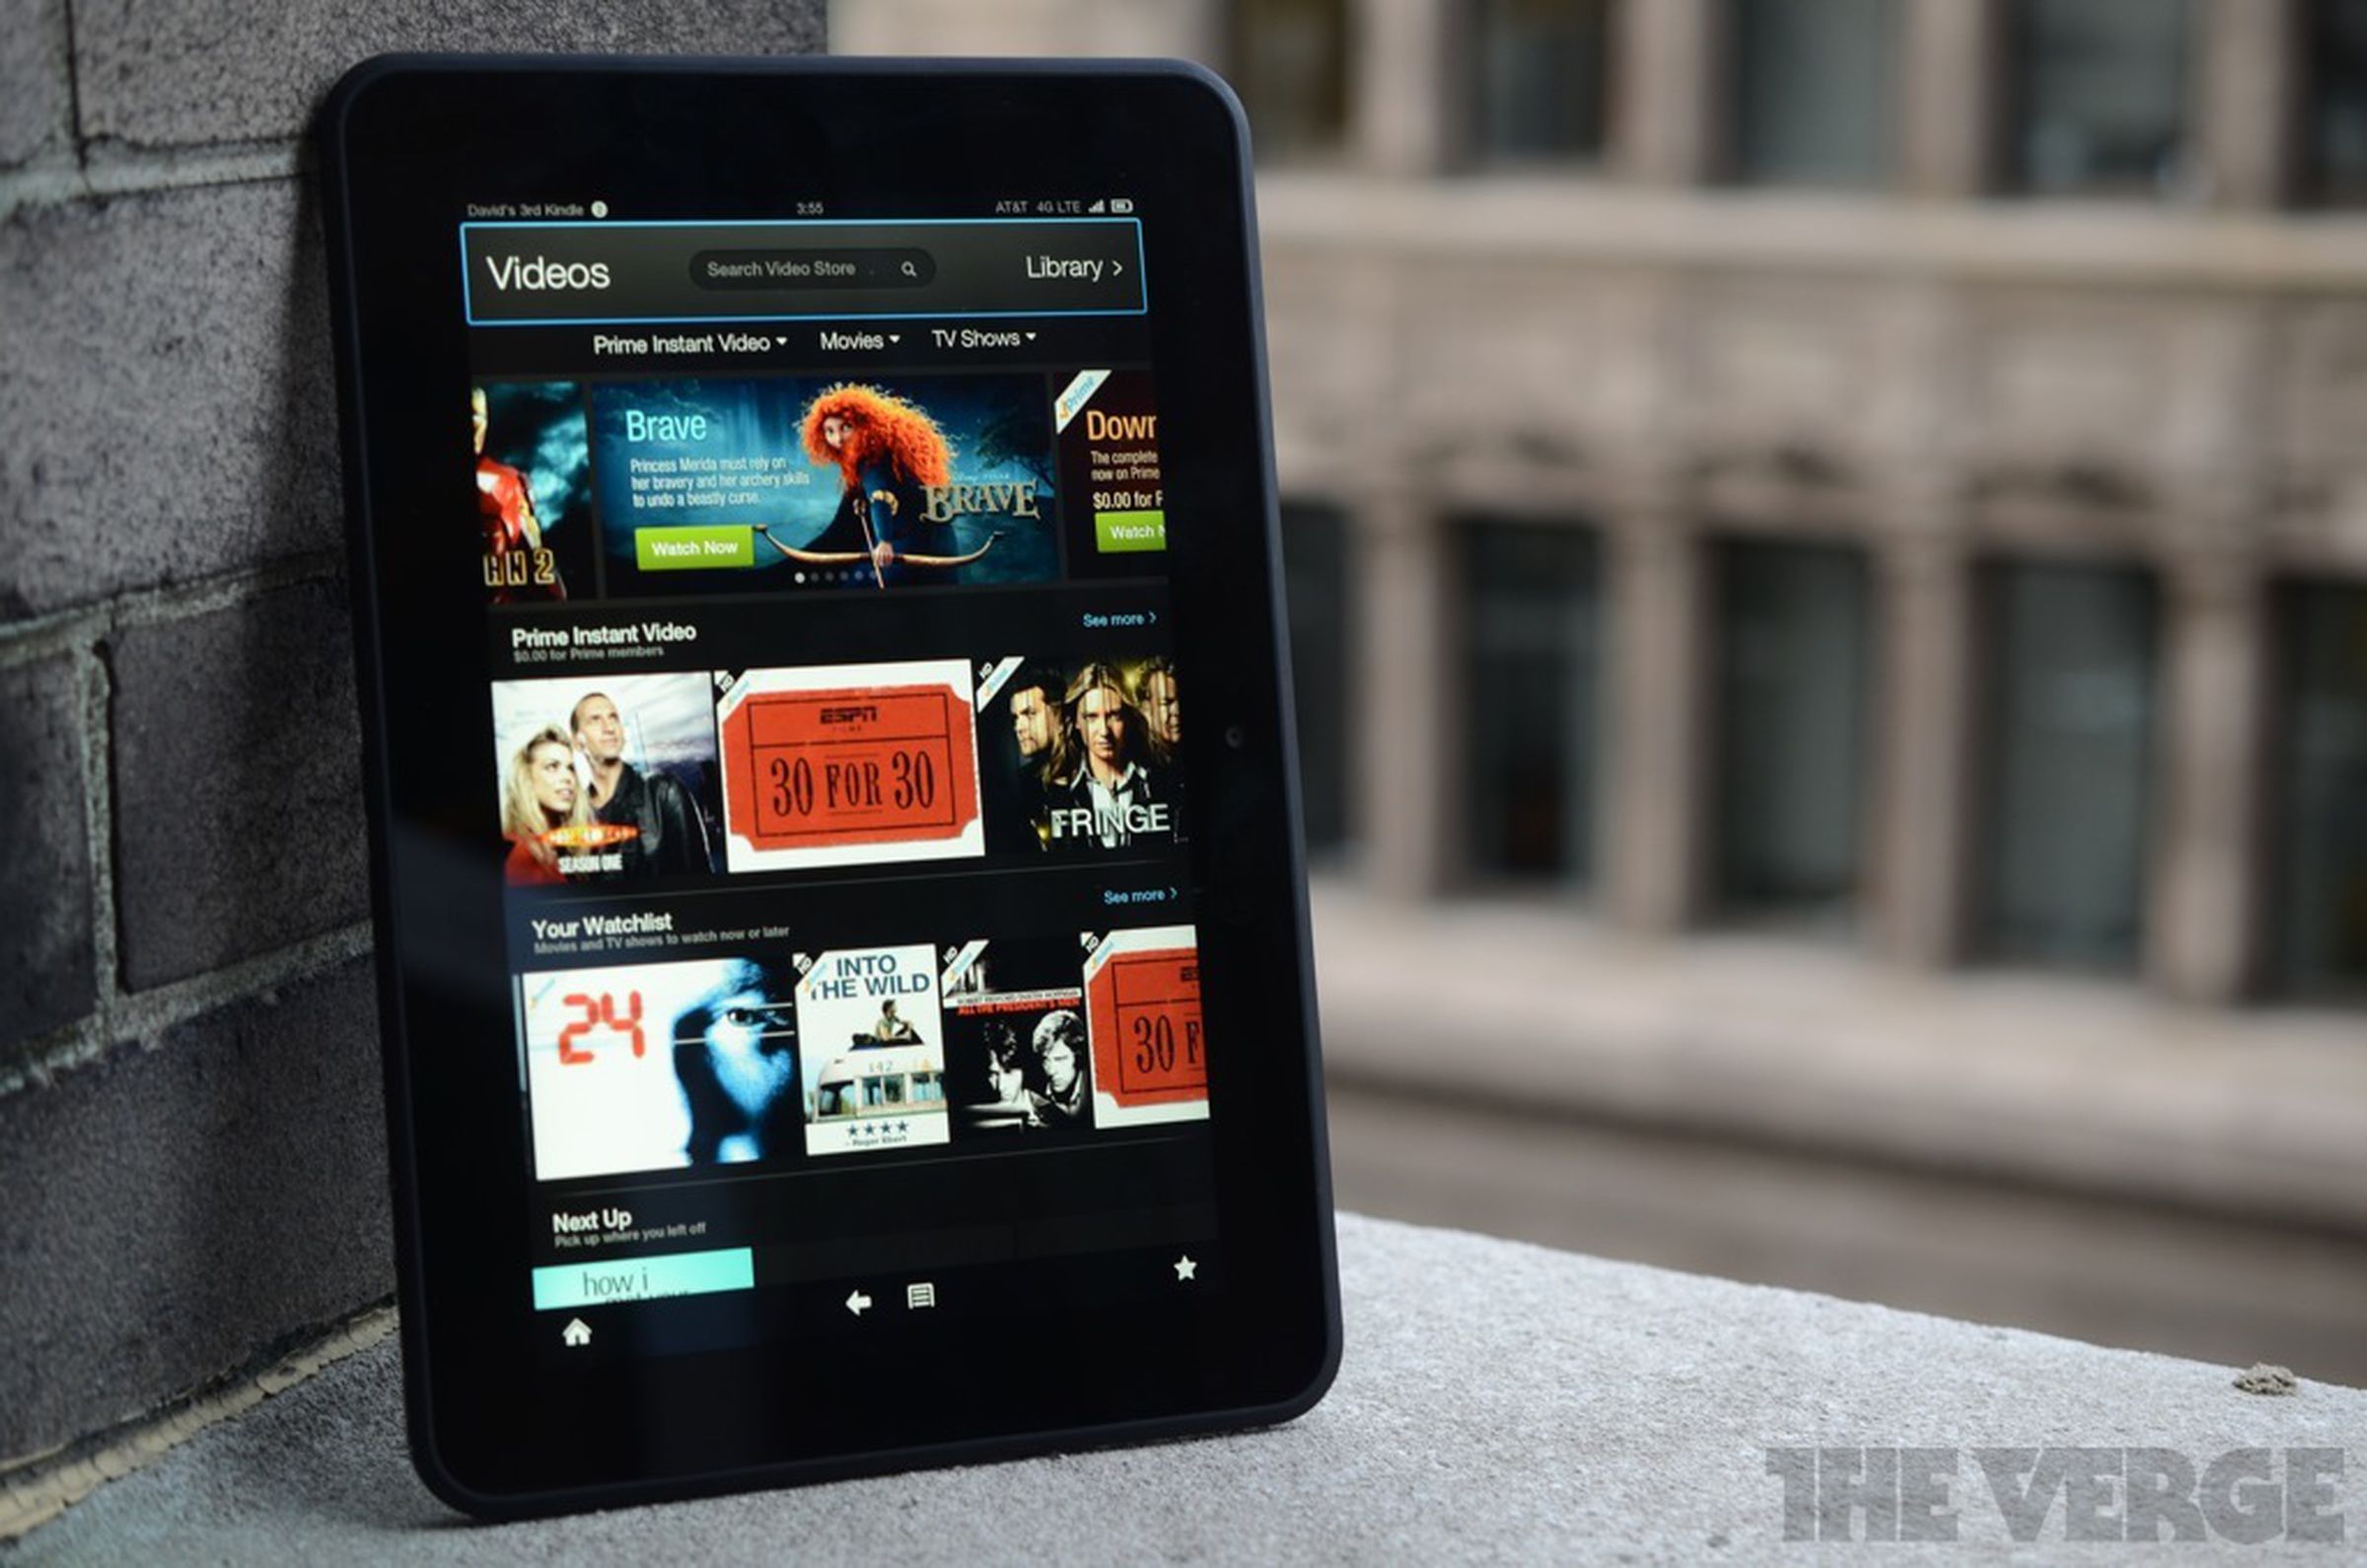 Amazon Kindle Fire HD 8.9 hands-on photos